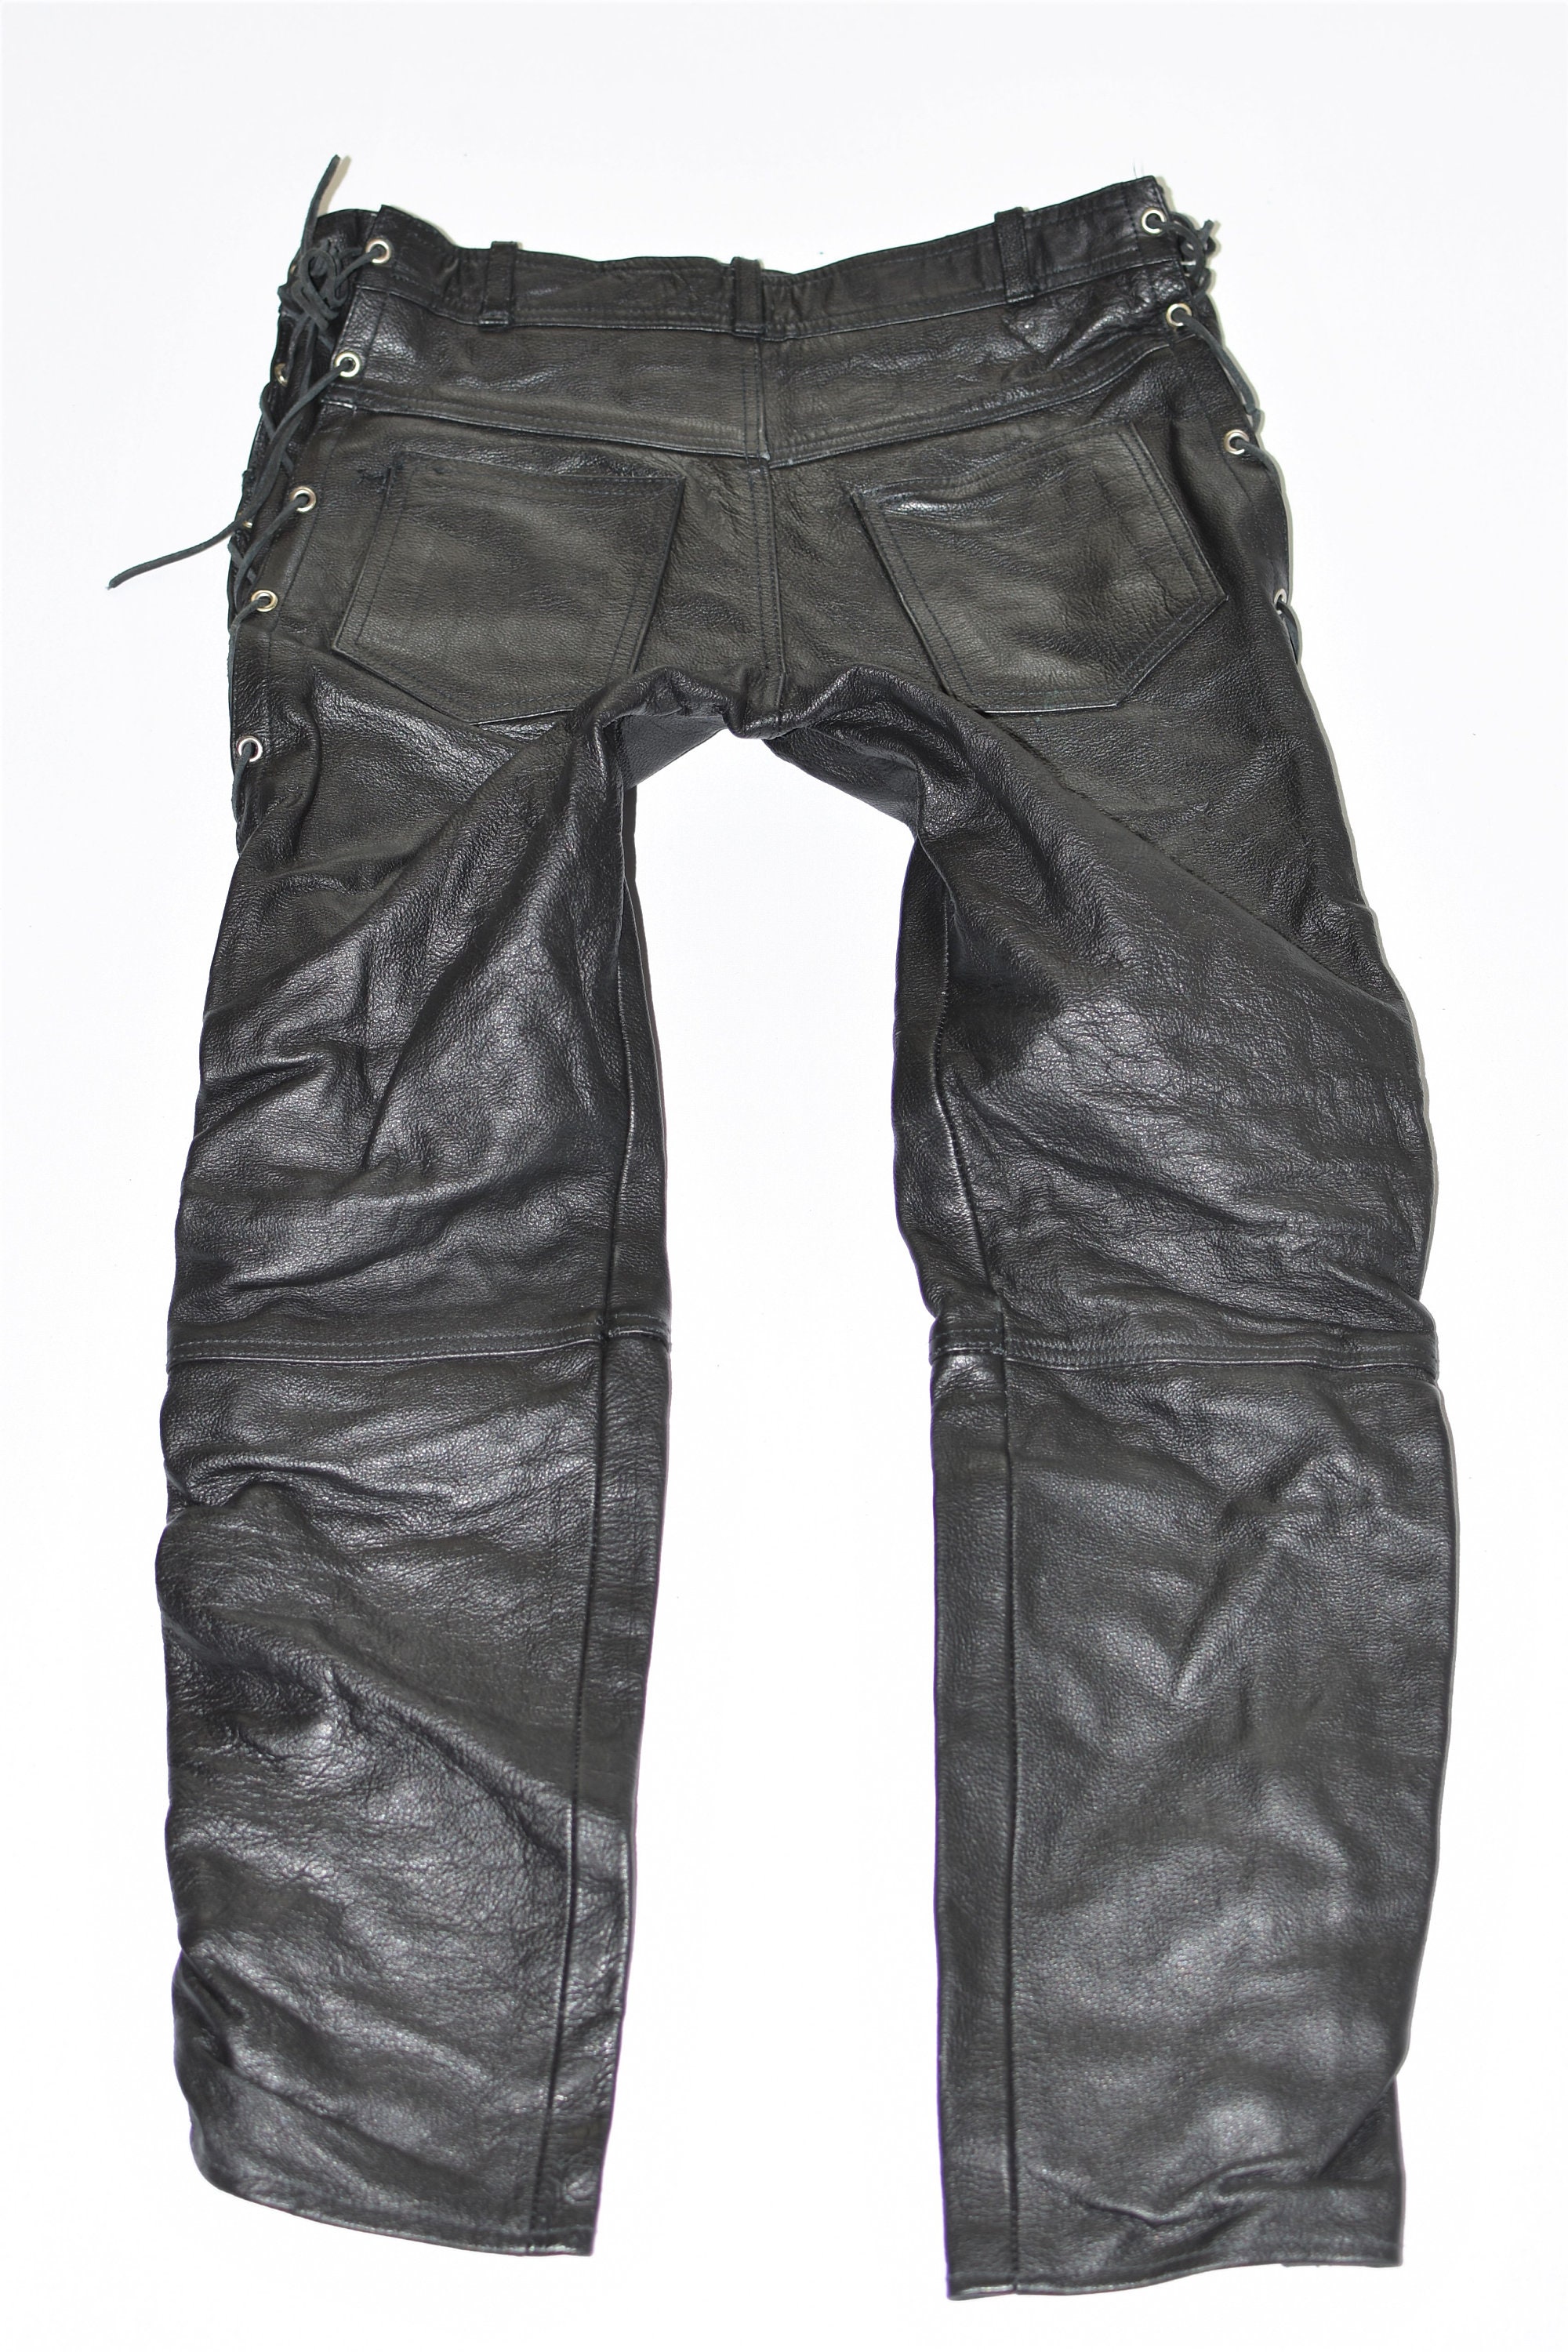 Vintage Lace up Men's Leather Biker Motorcycle Black Trousers Pants ...